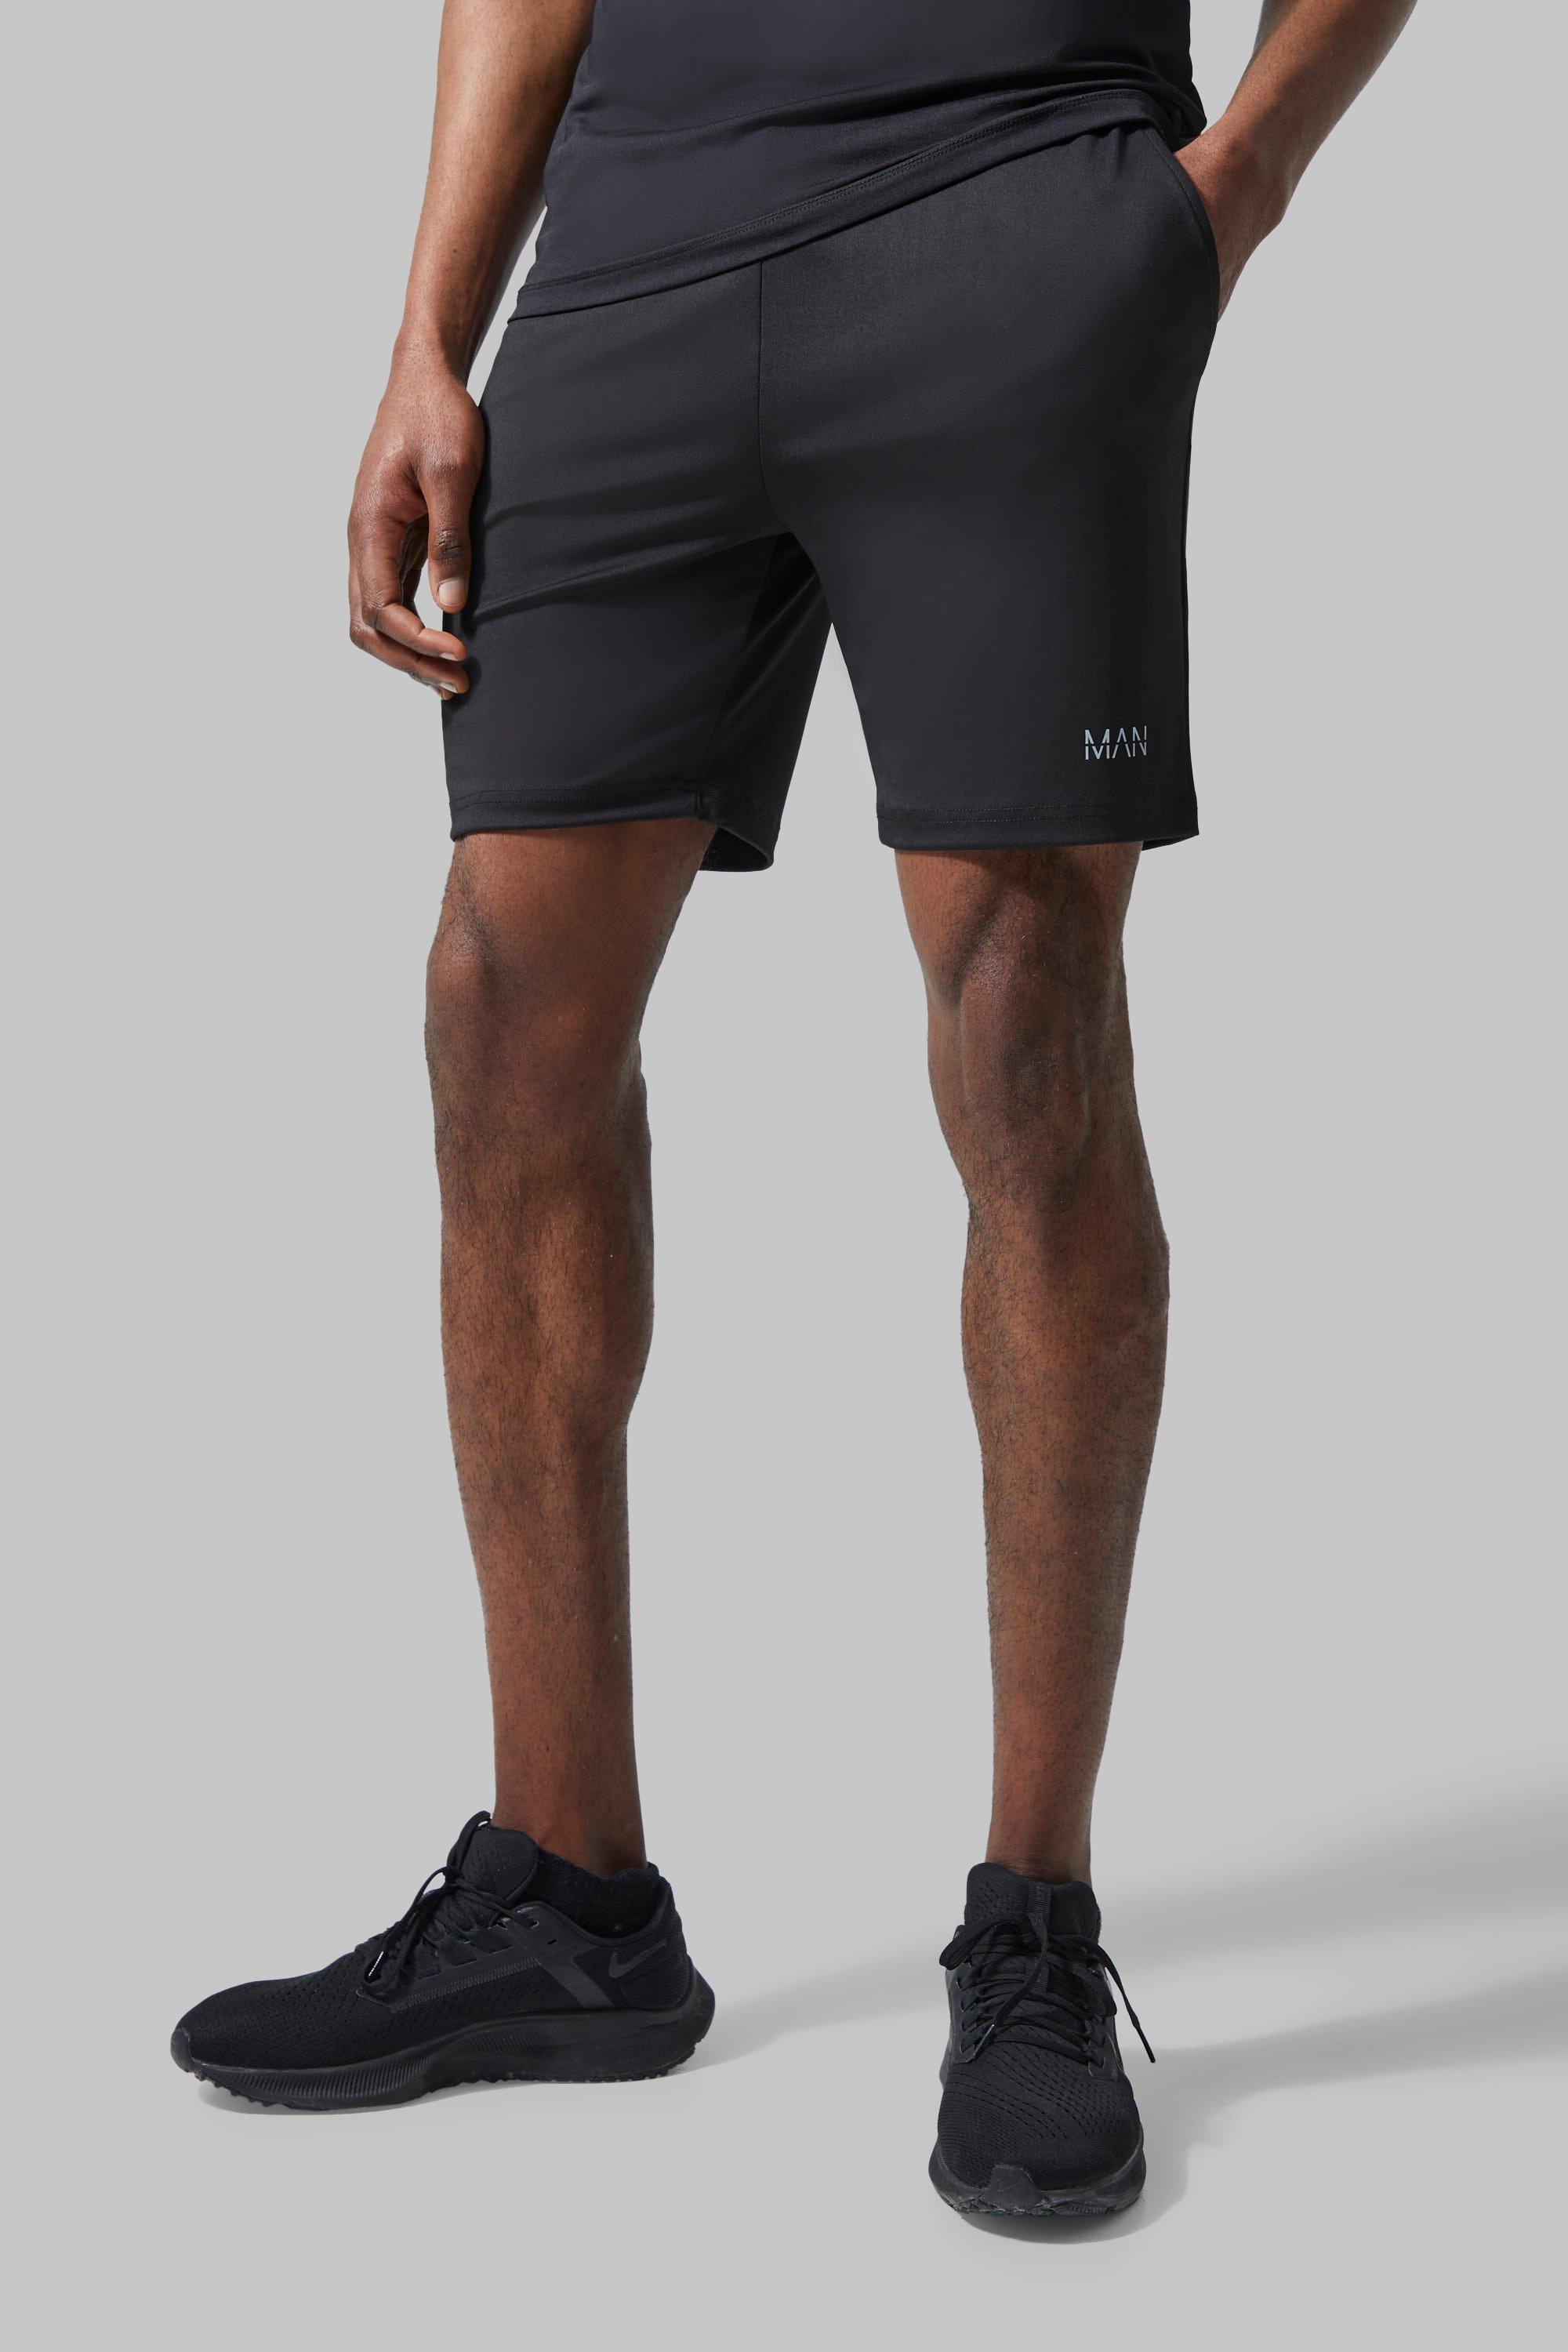 Mens Black Man Active Gym Performance Shorts, Black